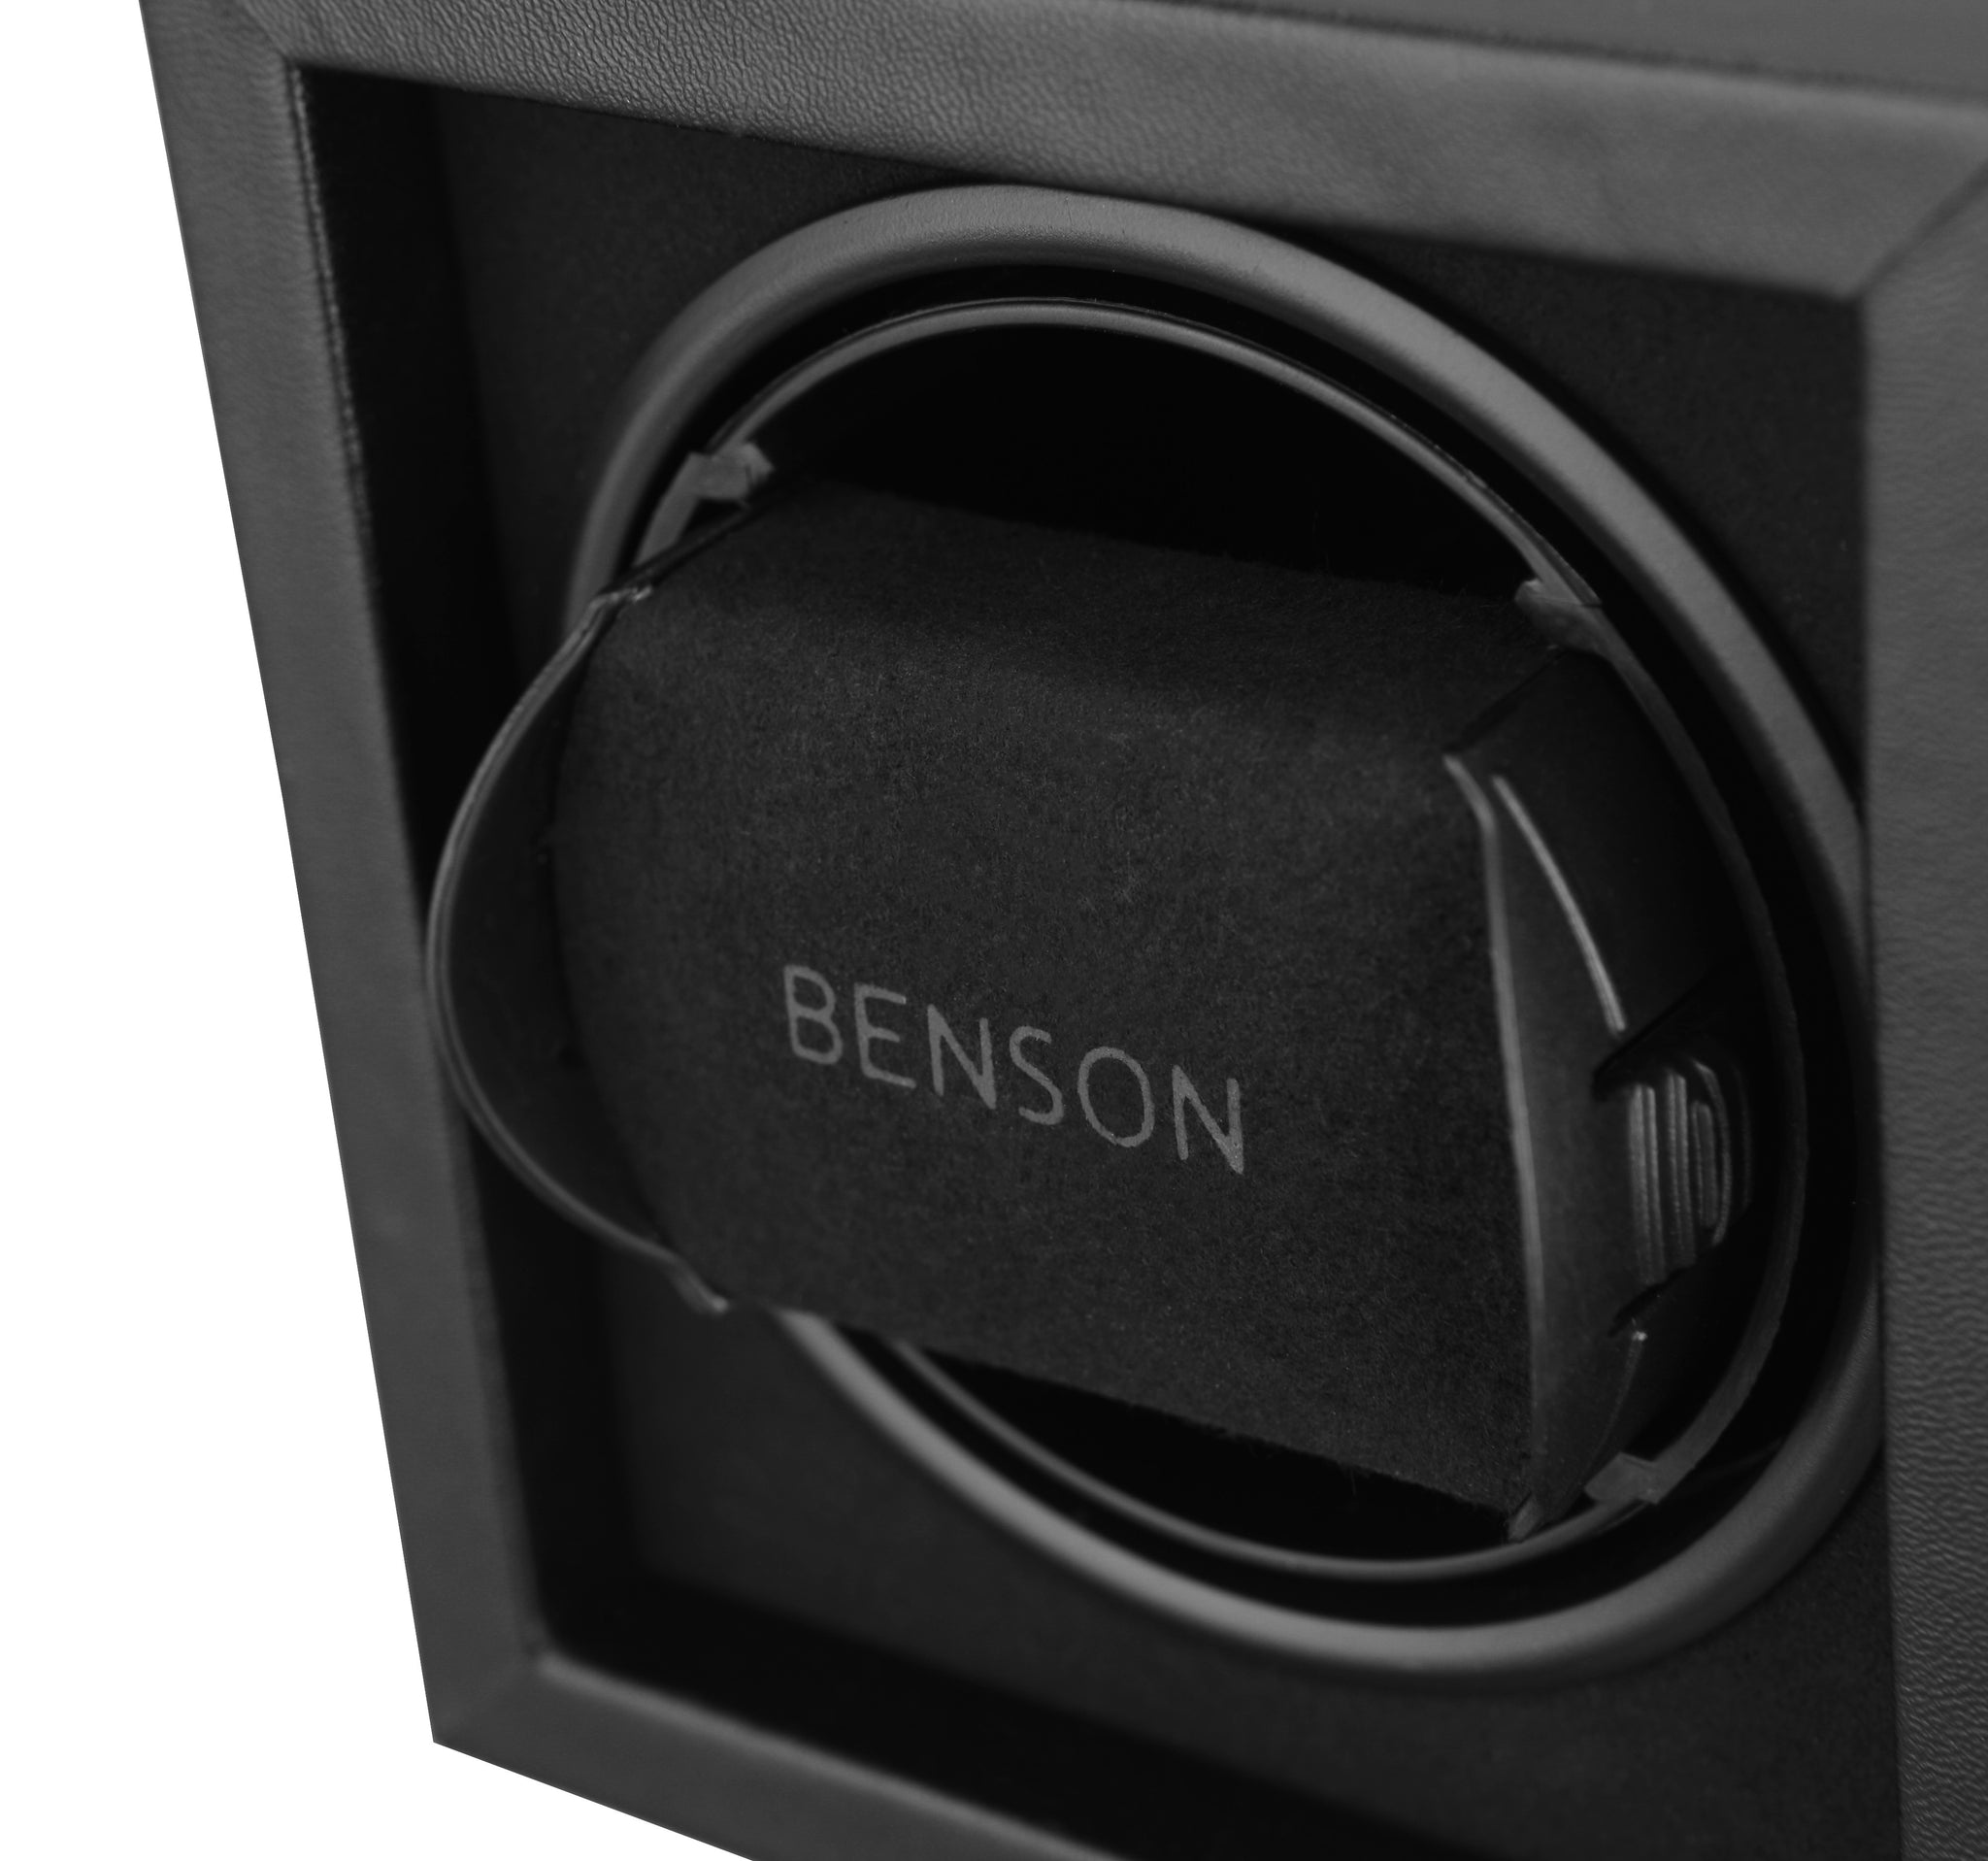 Benson Compact Series Single Watch winder